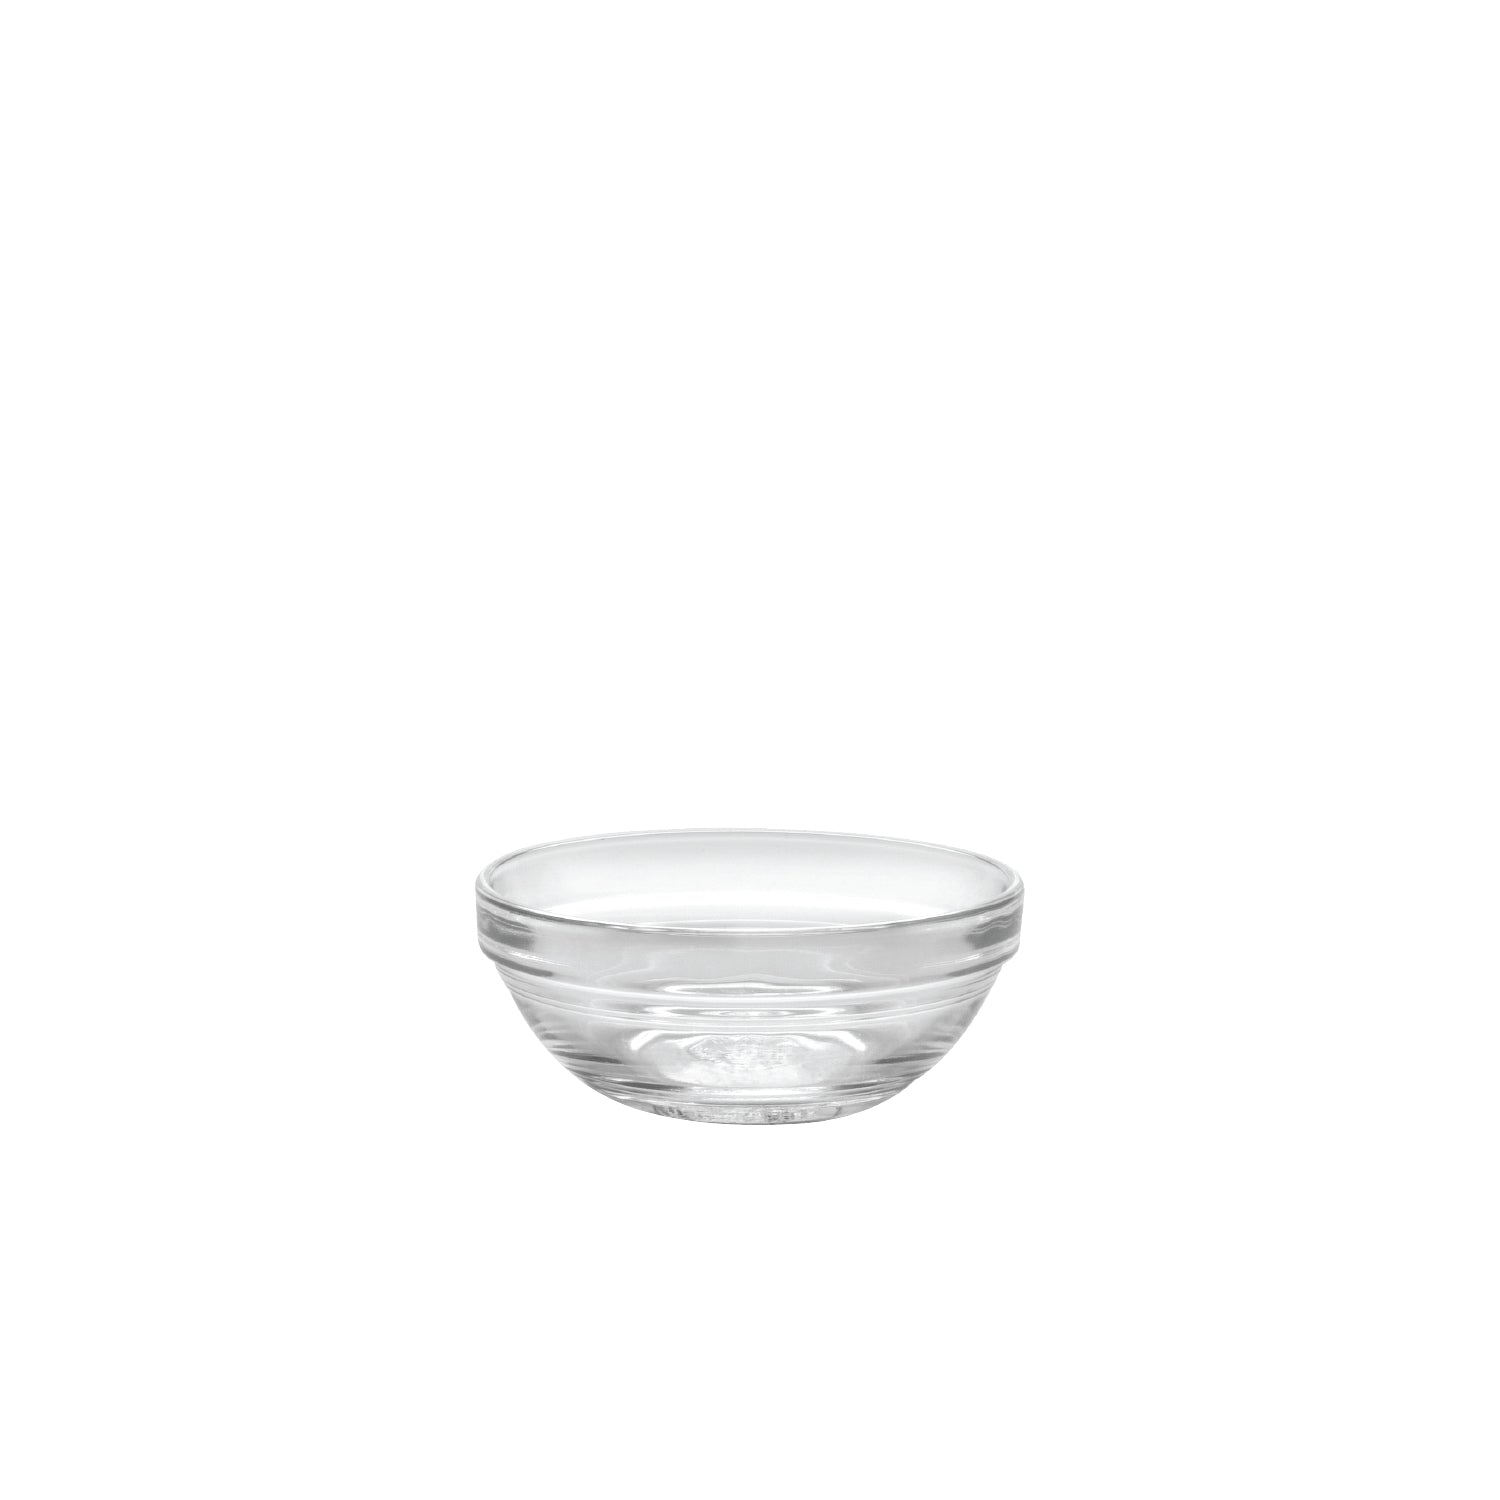 Duralex Duralex 1.5 quart Glass Mixing Bowl - Whisk